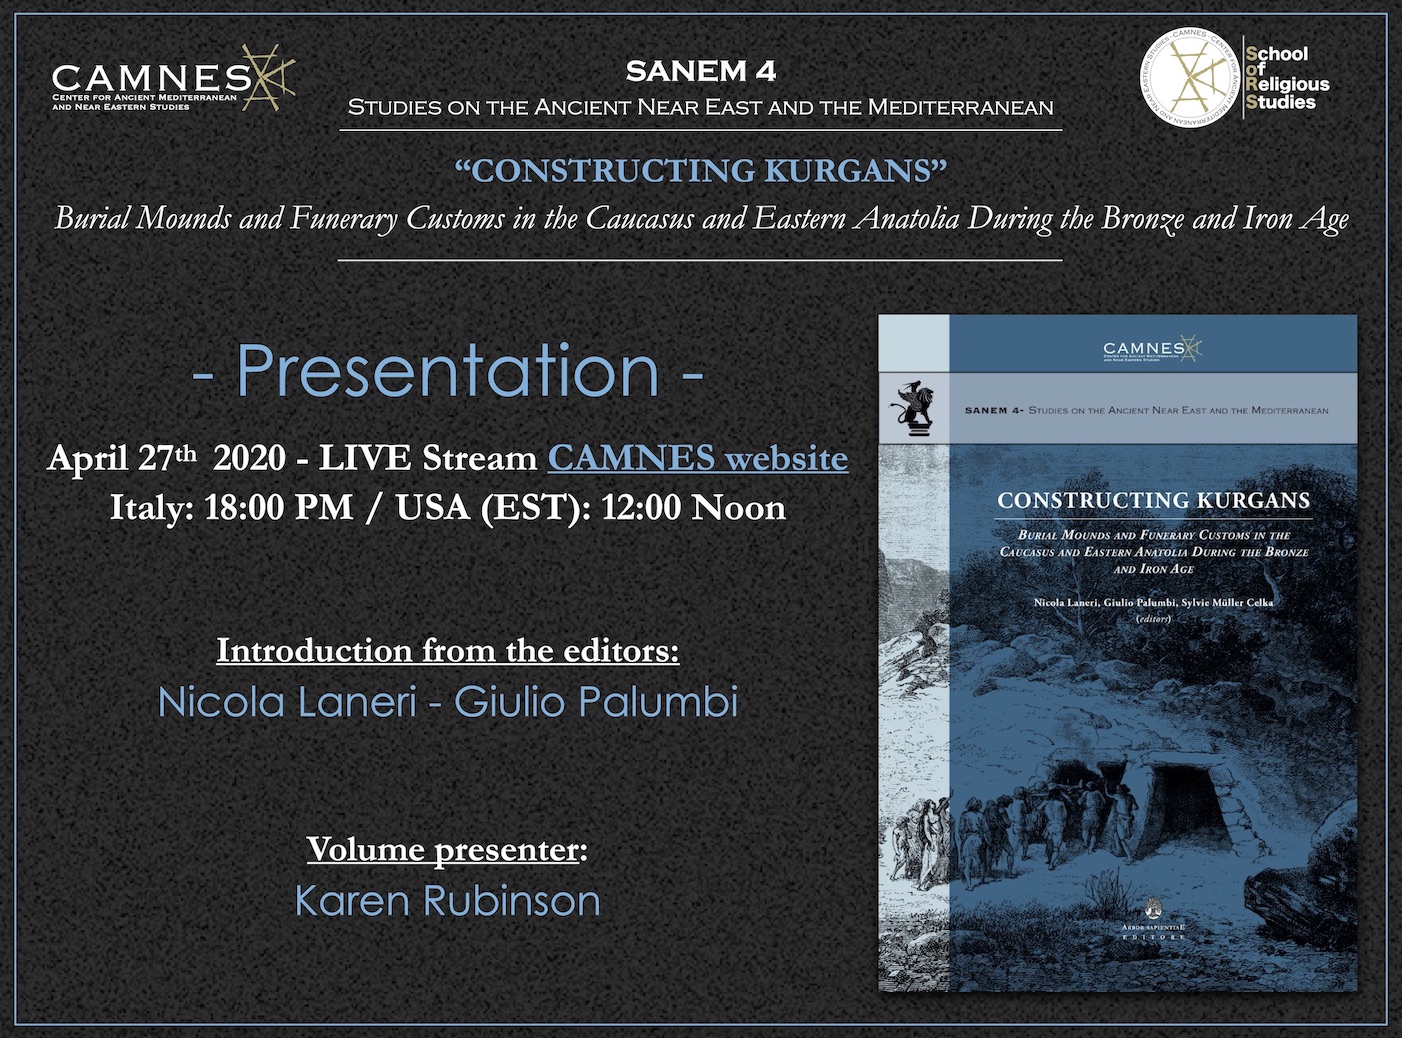 Presentazione SANEM 4 "Constructing Kurgans" in LIVE streaming